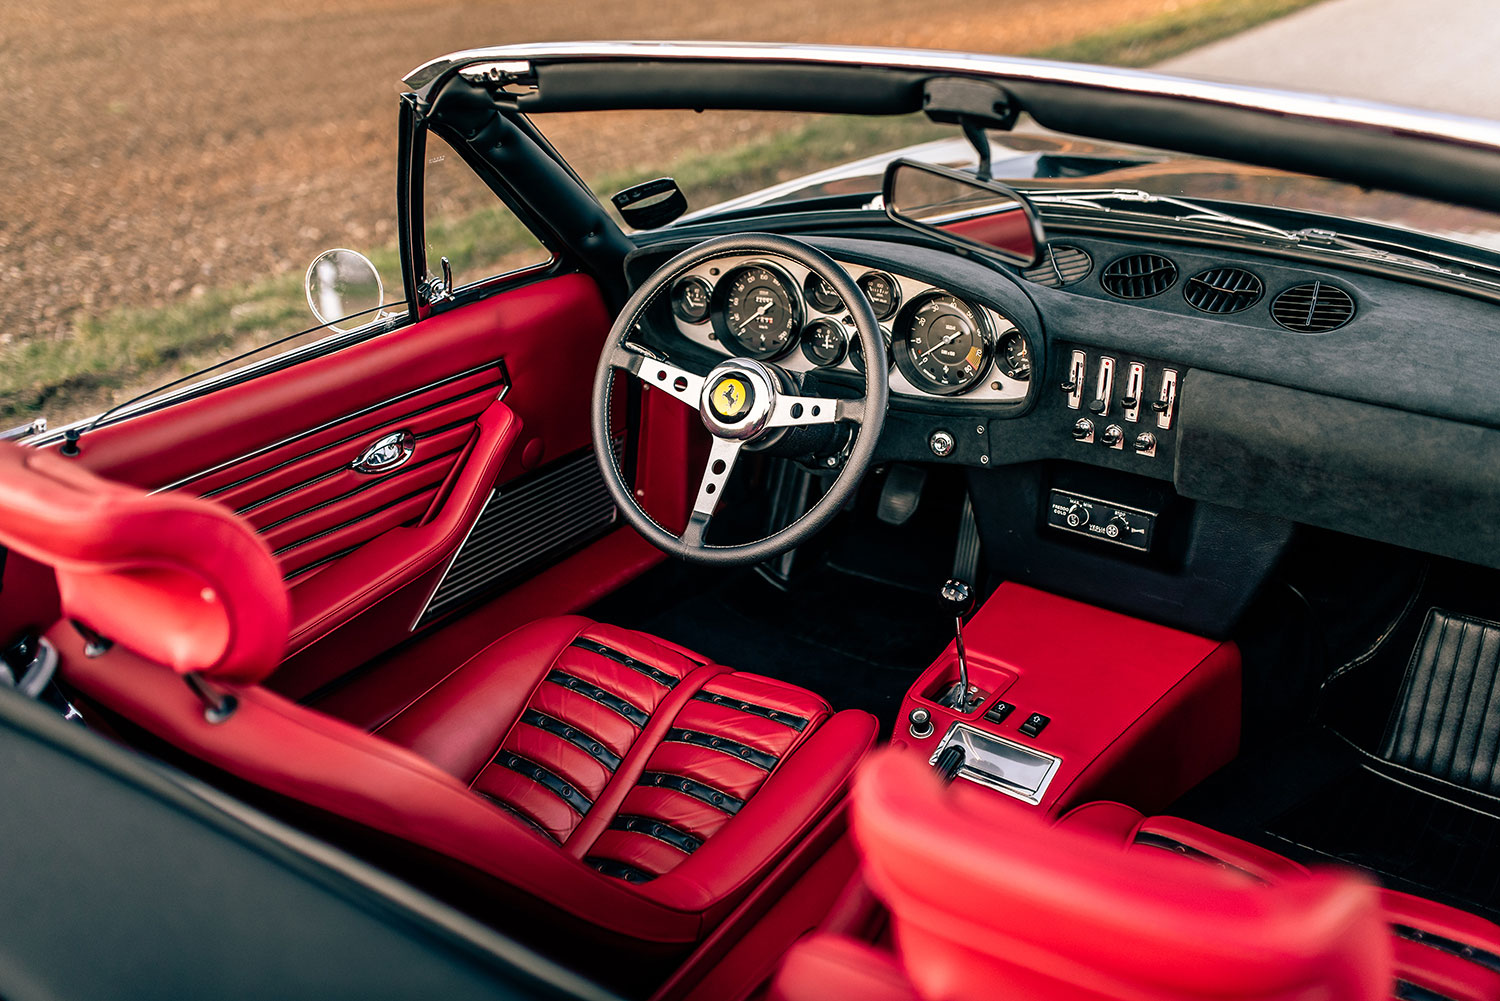 Ferrari 365 GTS/4 Daytona Sypder